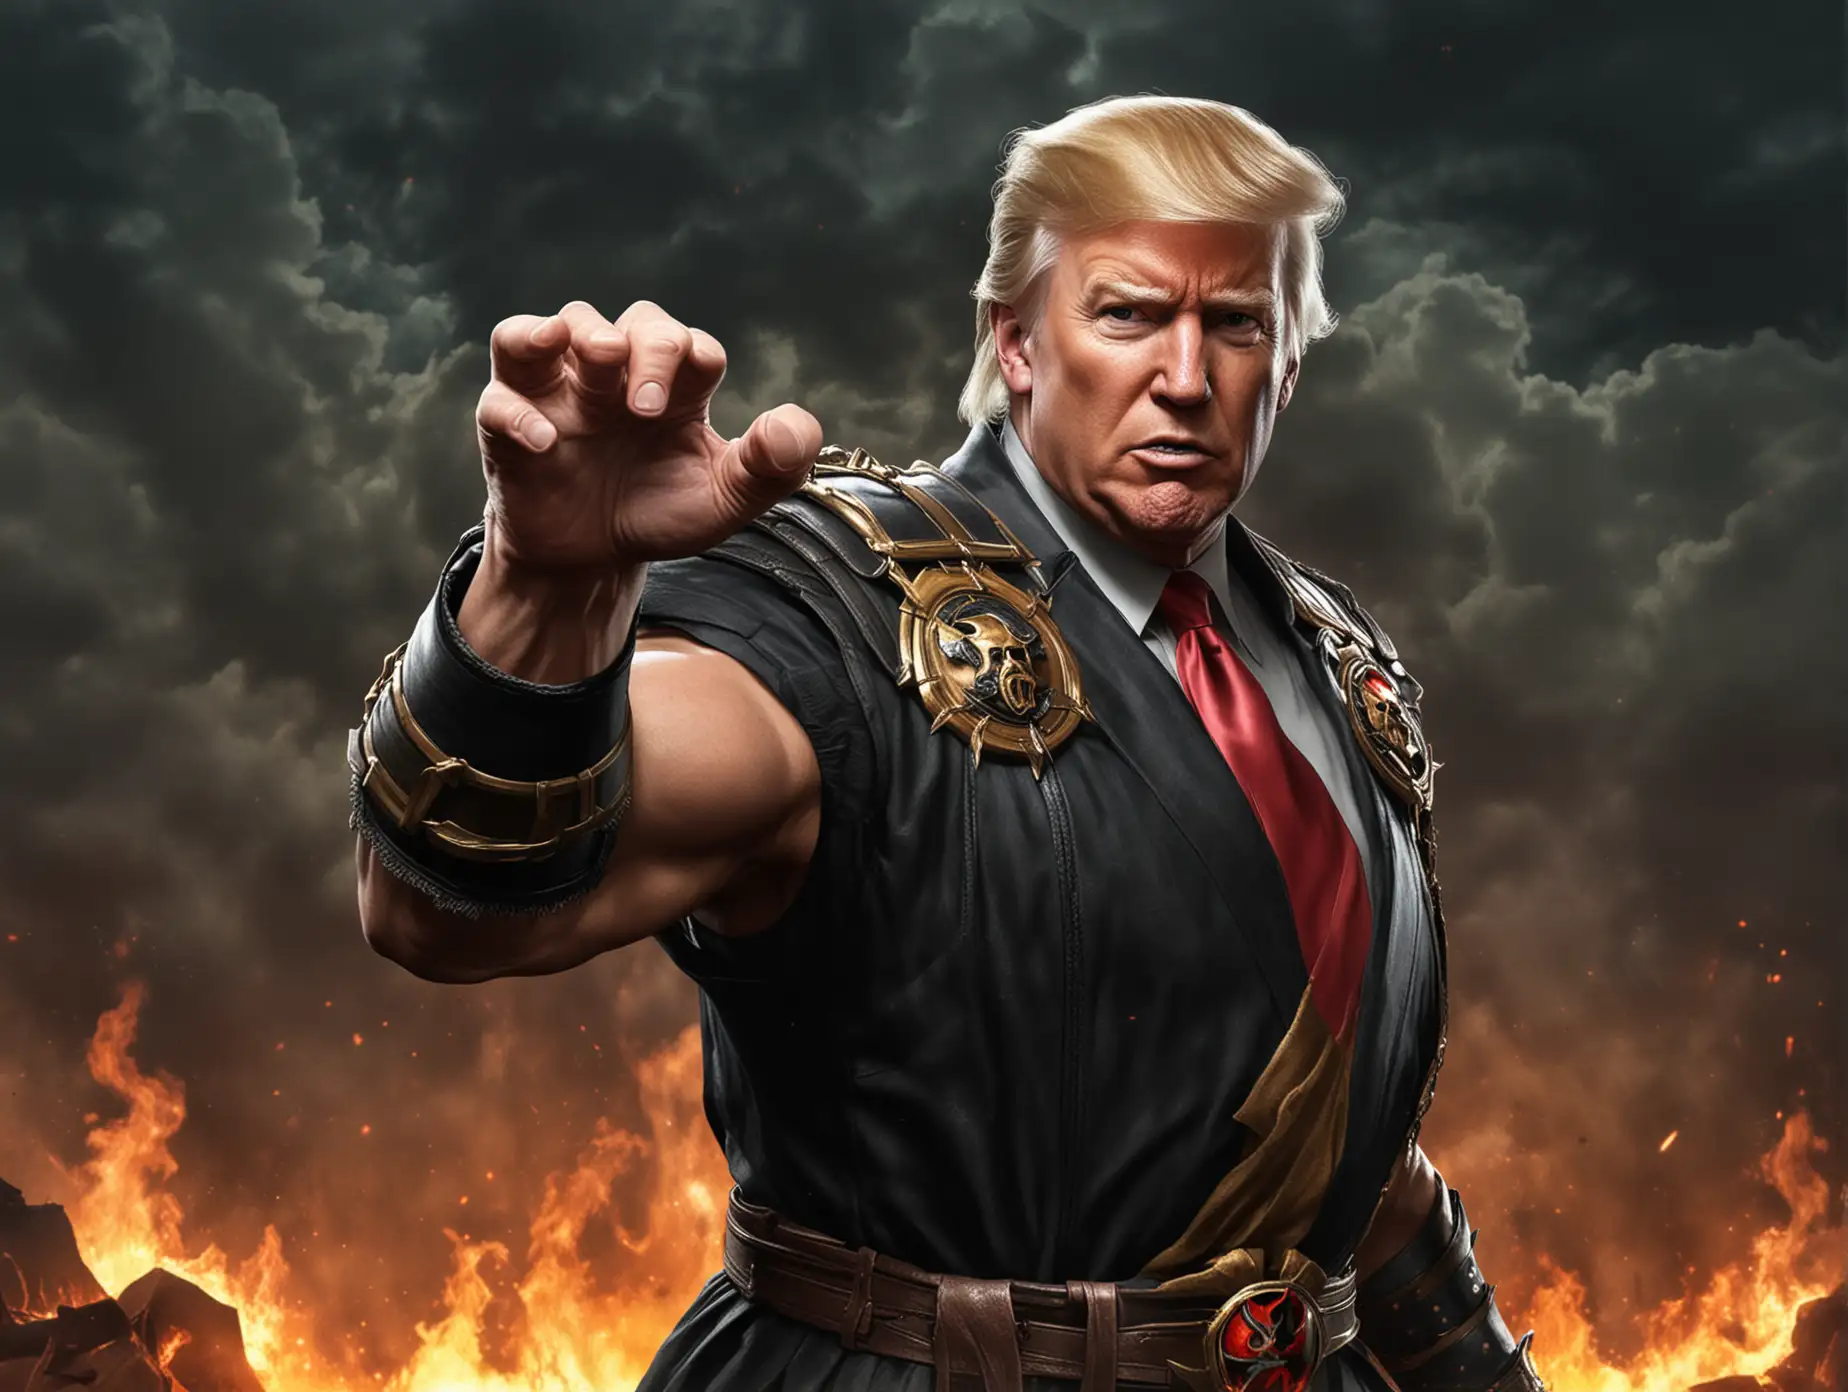 Donald Trump as a Mortal Kombat character, fatality on Joe Biden